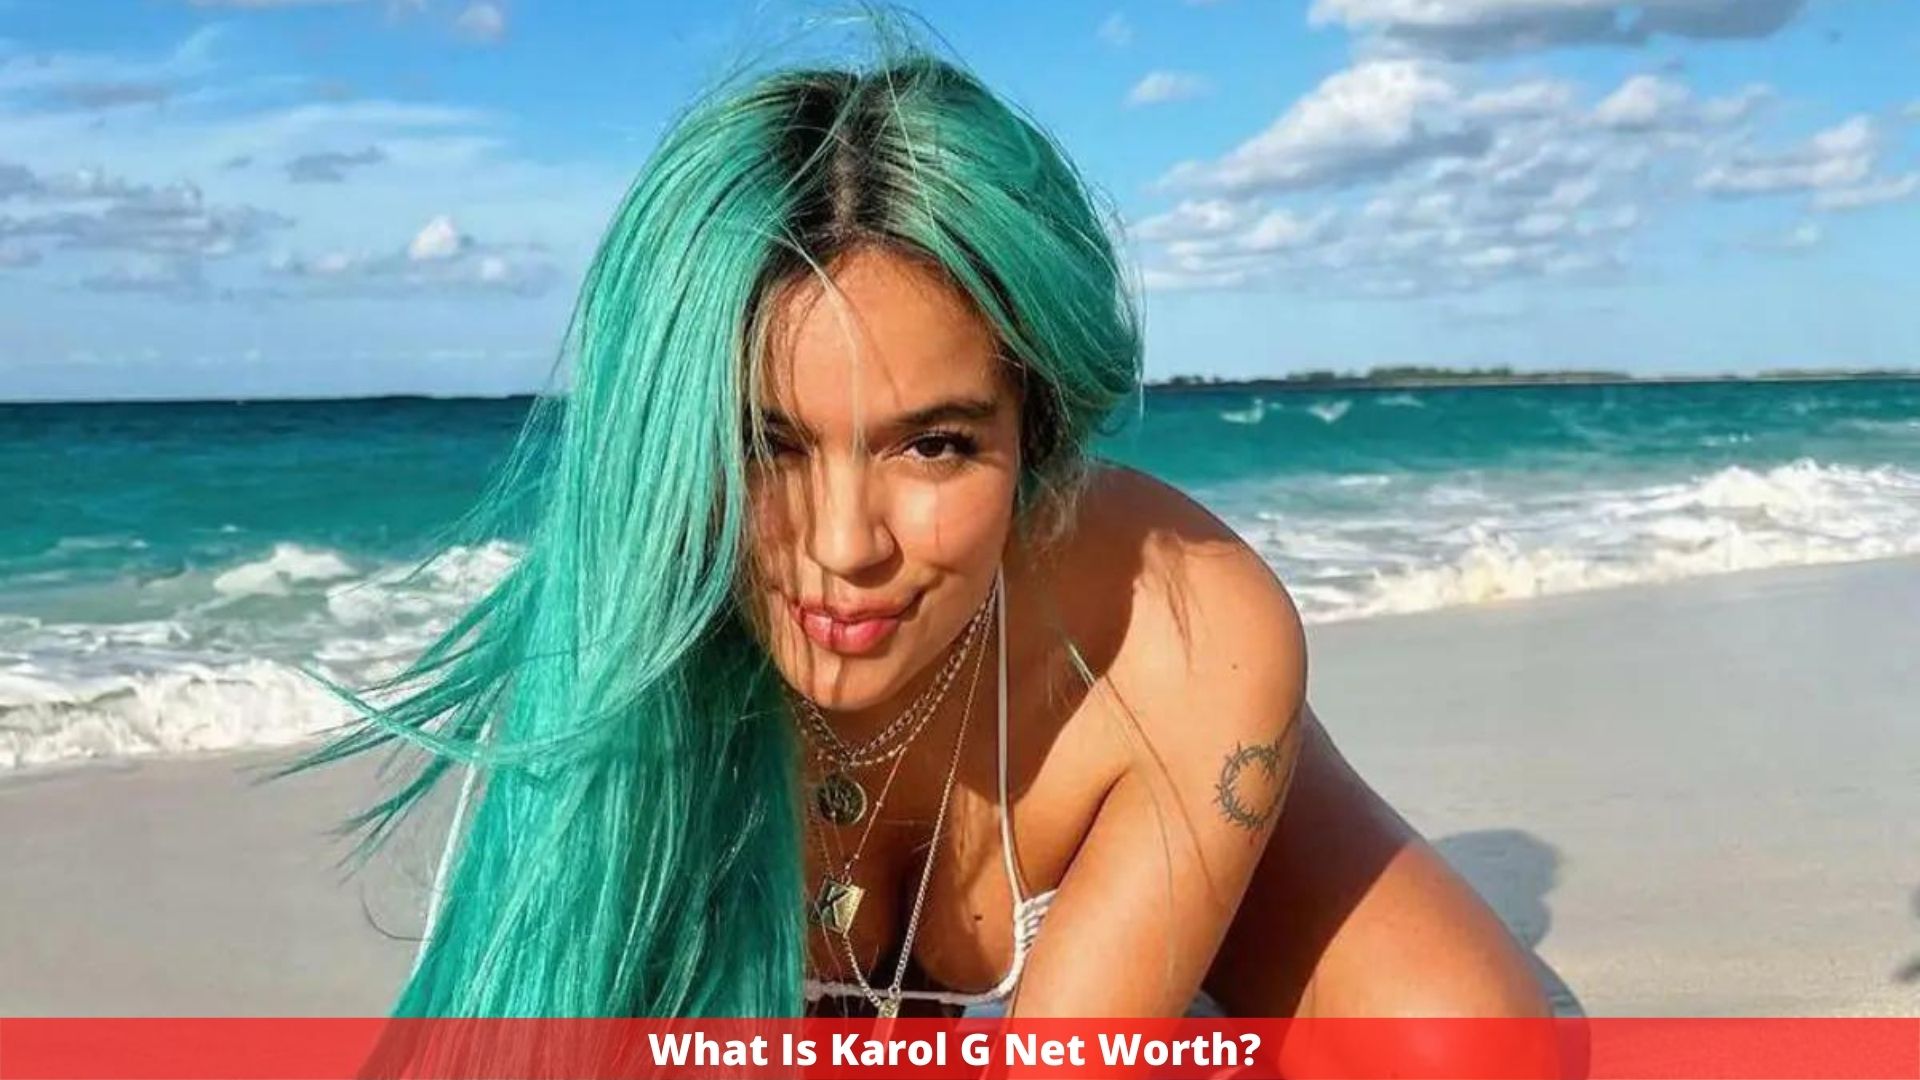 What Is Karol G Net Worth?